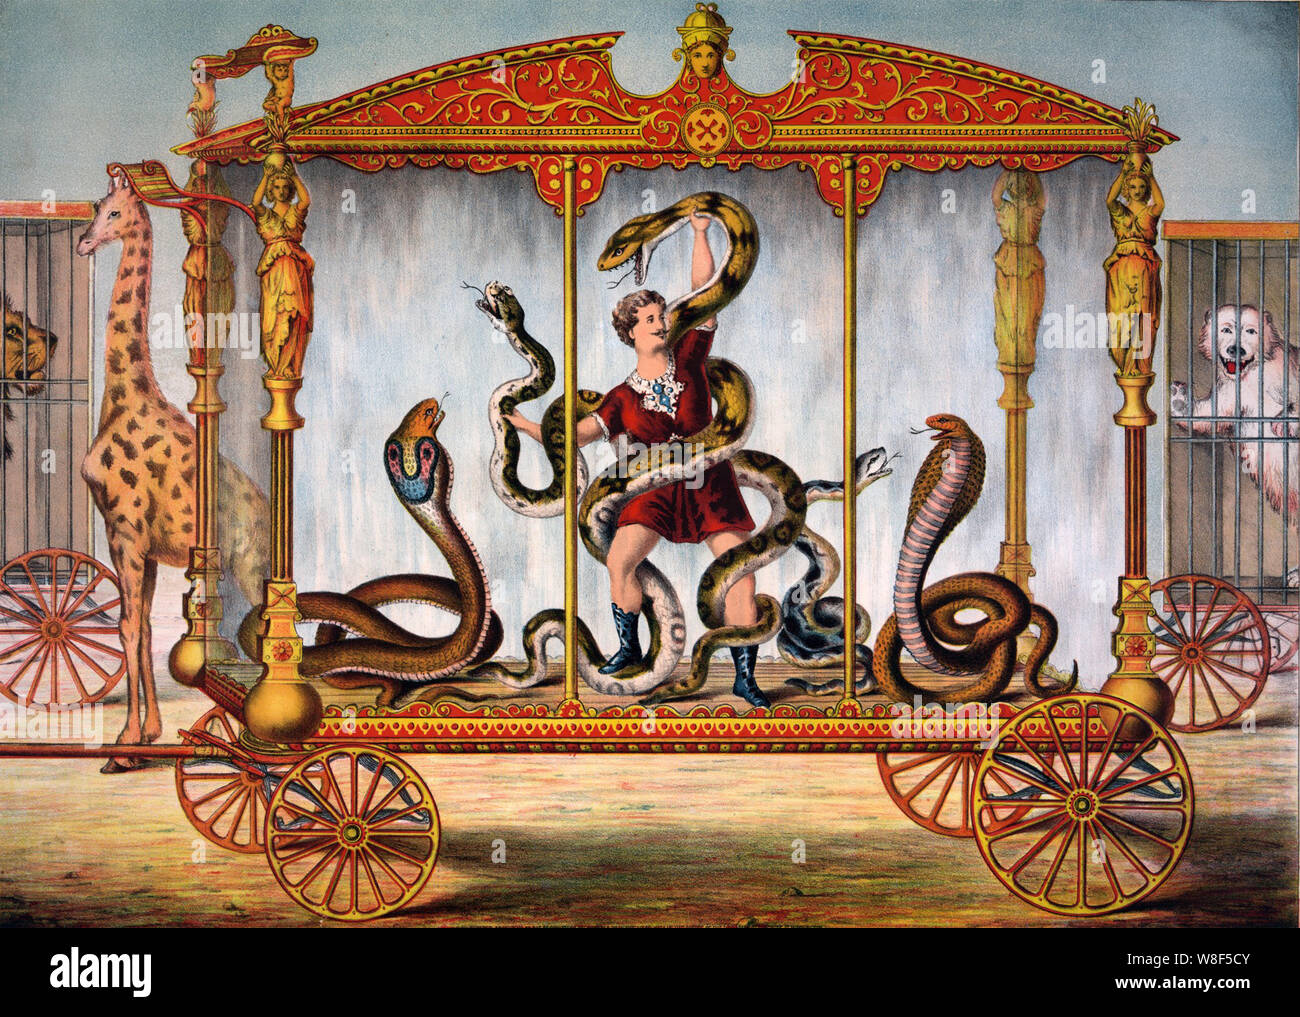 snake wrangler vintage caged circus poster Stock Photo - Alamy